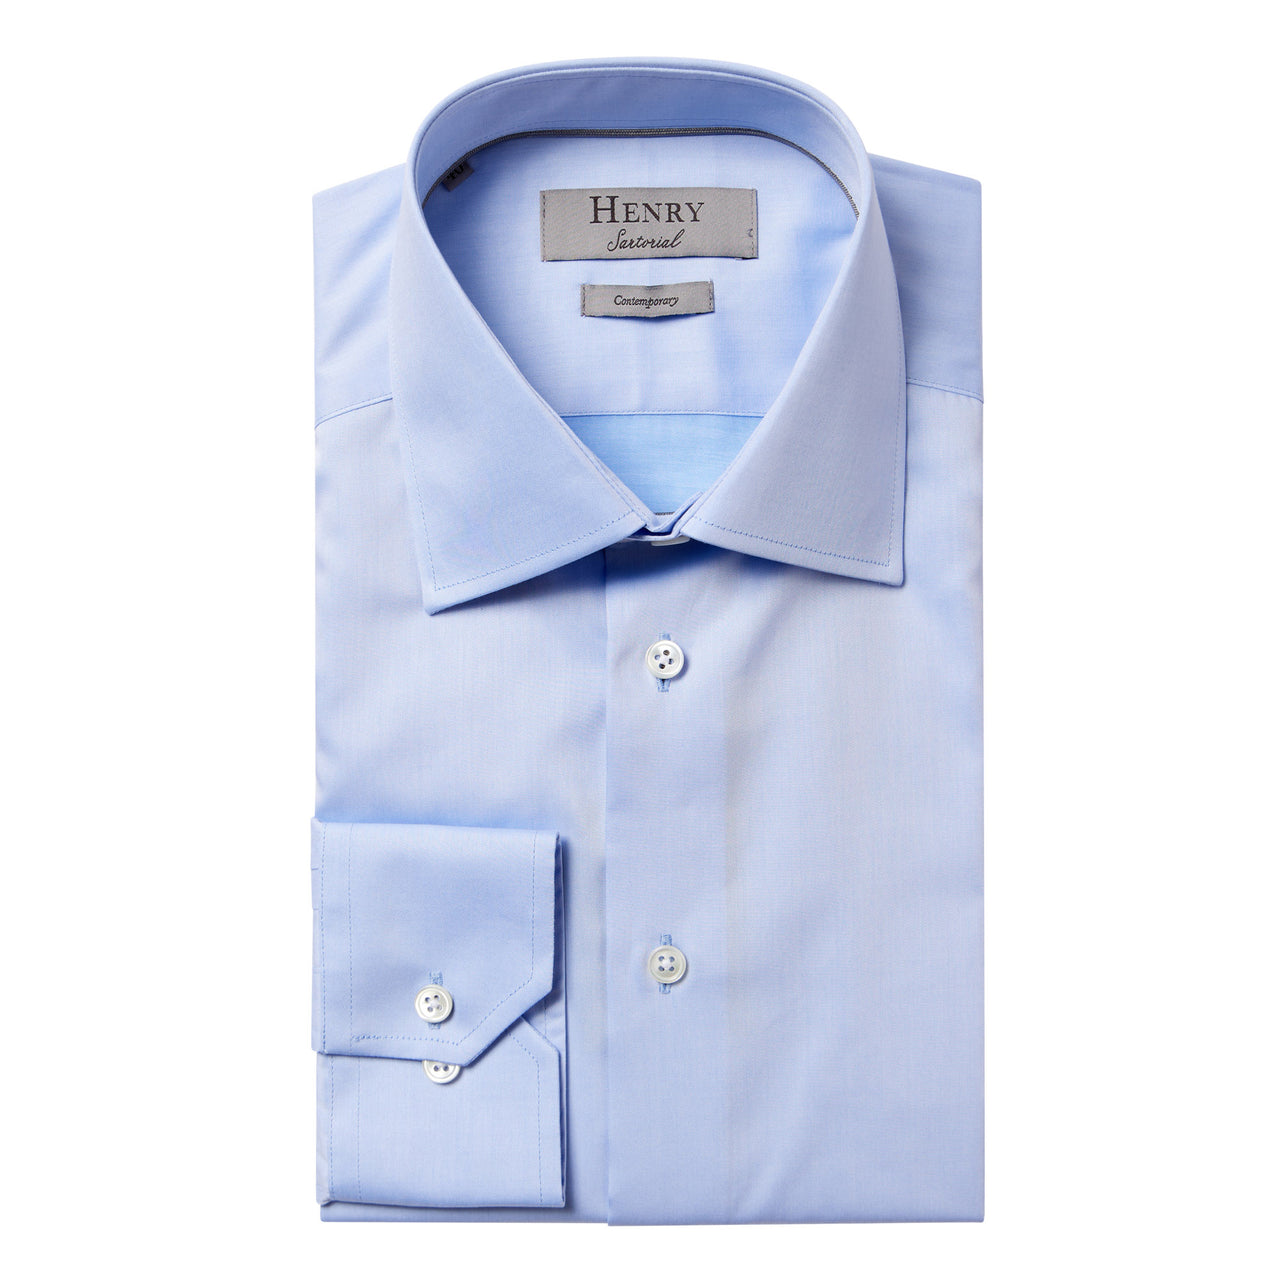 HENRY SARTORIAL Plain Twill Business Shirt Single Cuff Contemporary Fit LIGHT BLUE